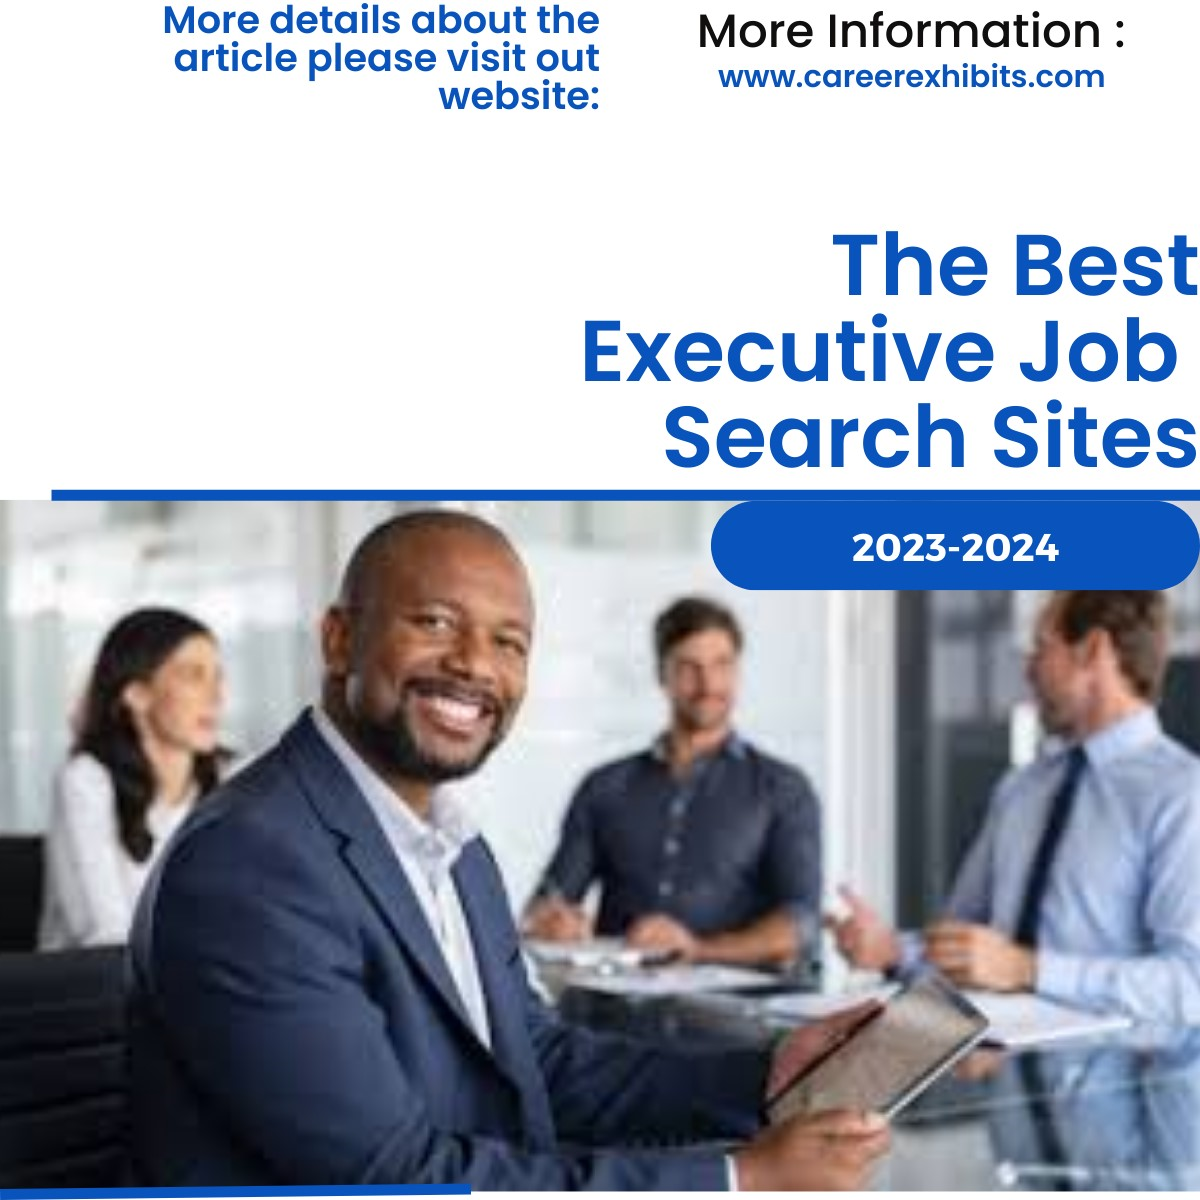 Executive Job Search Sites